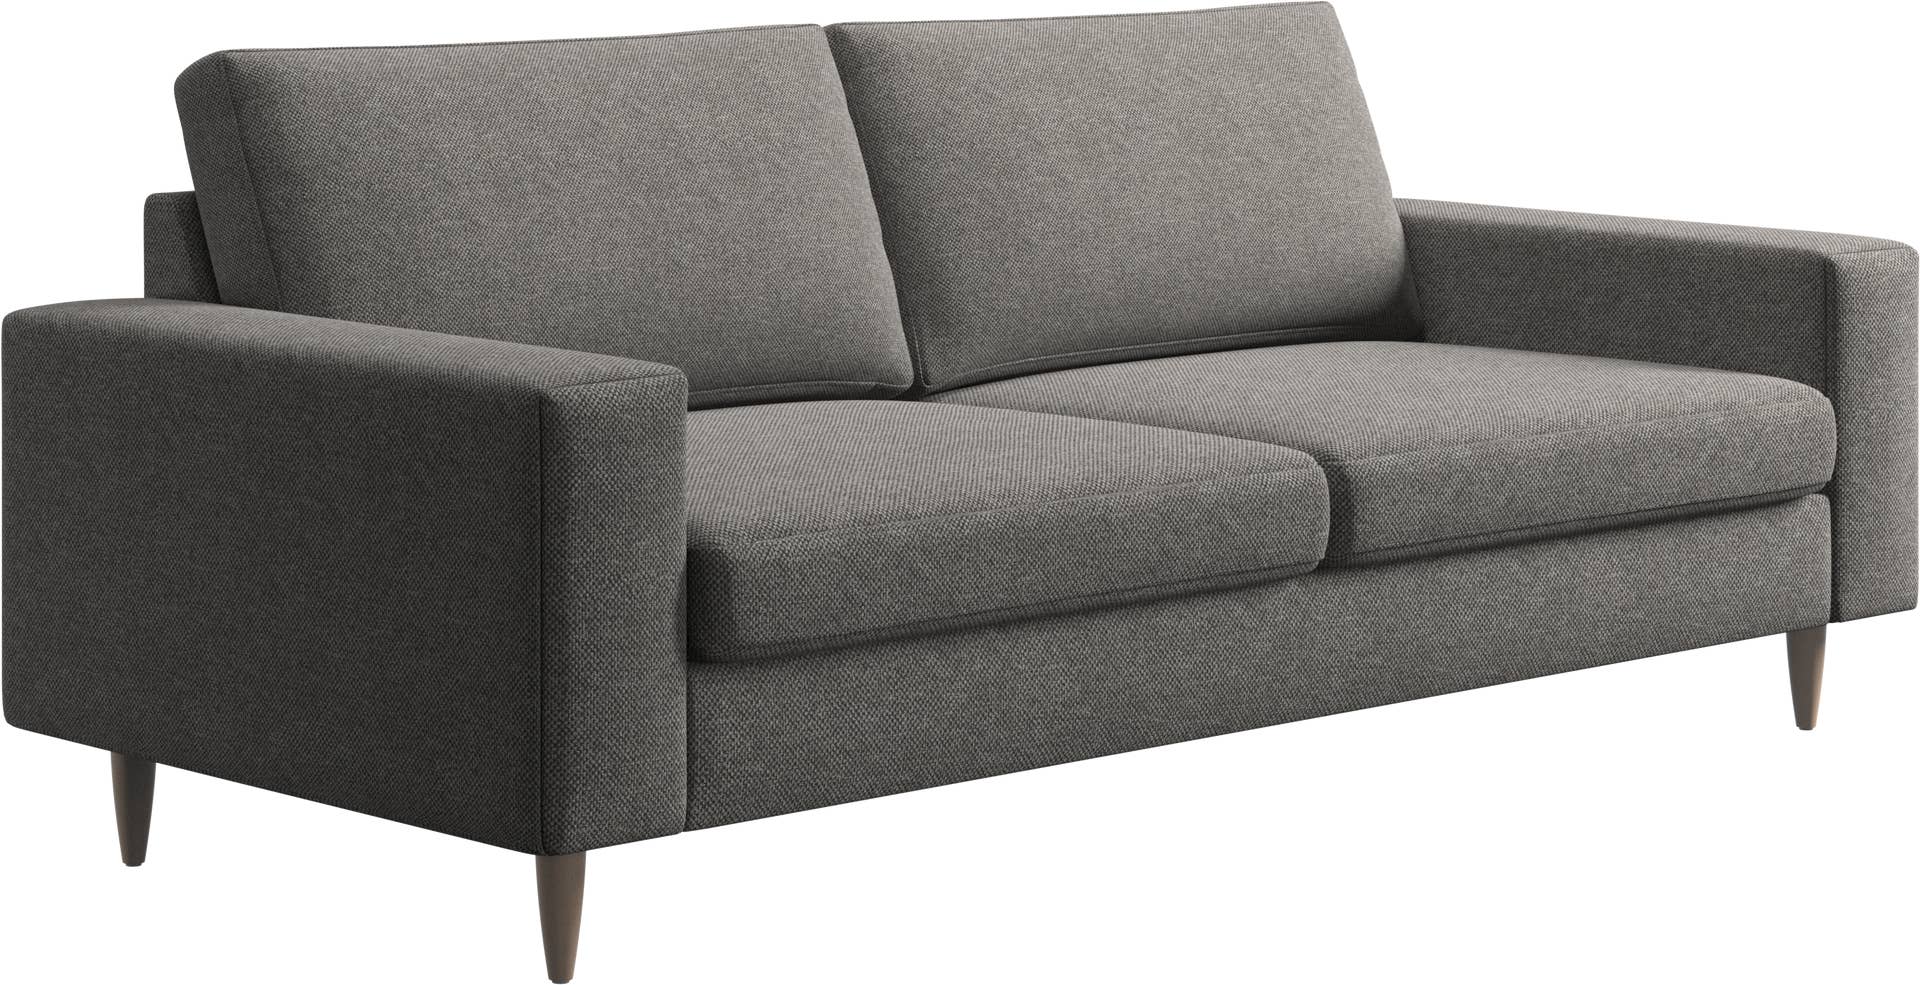 Indivi sofa | BoConcept